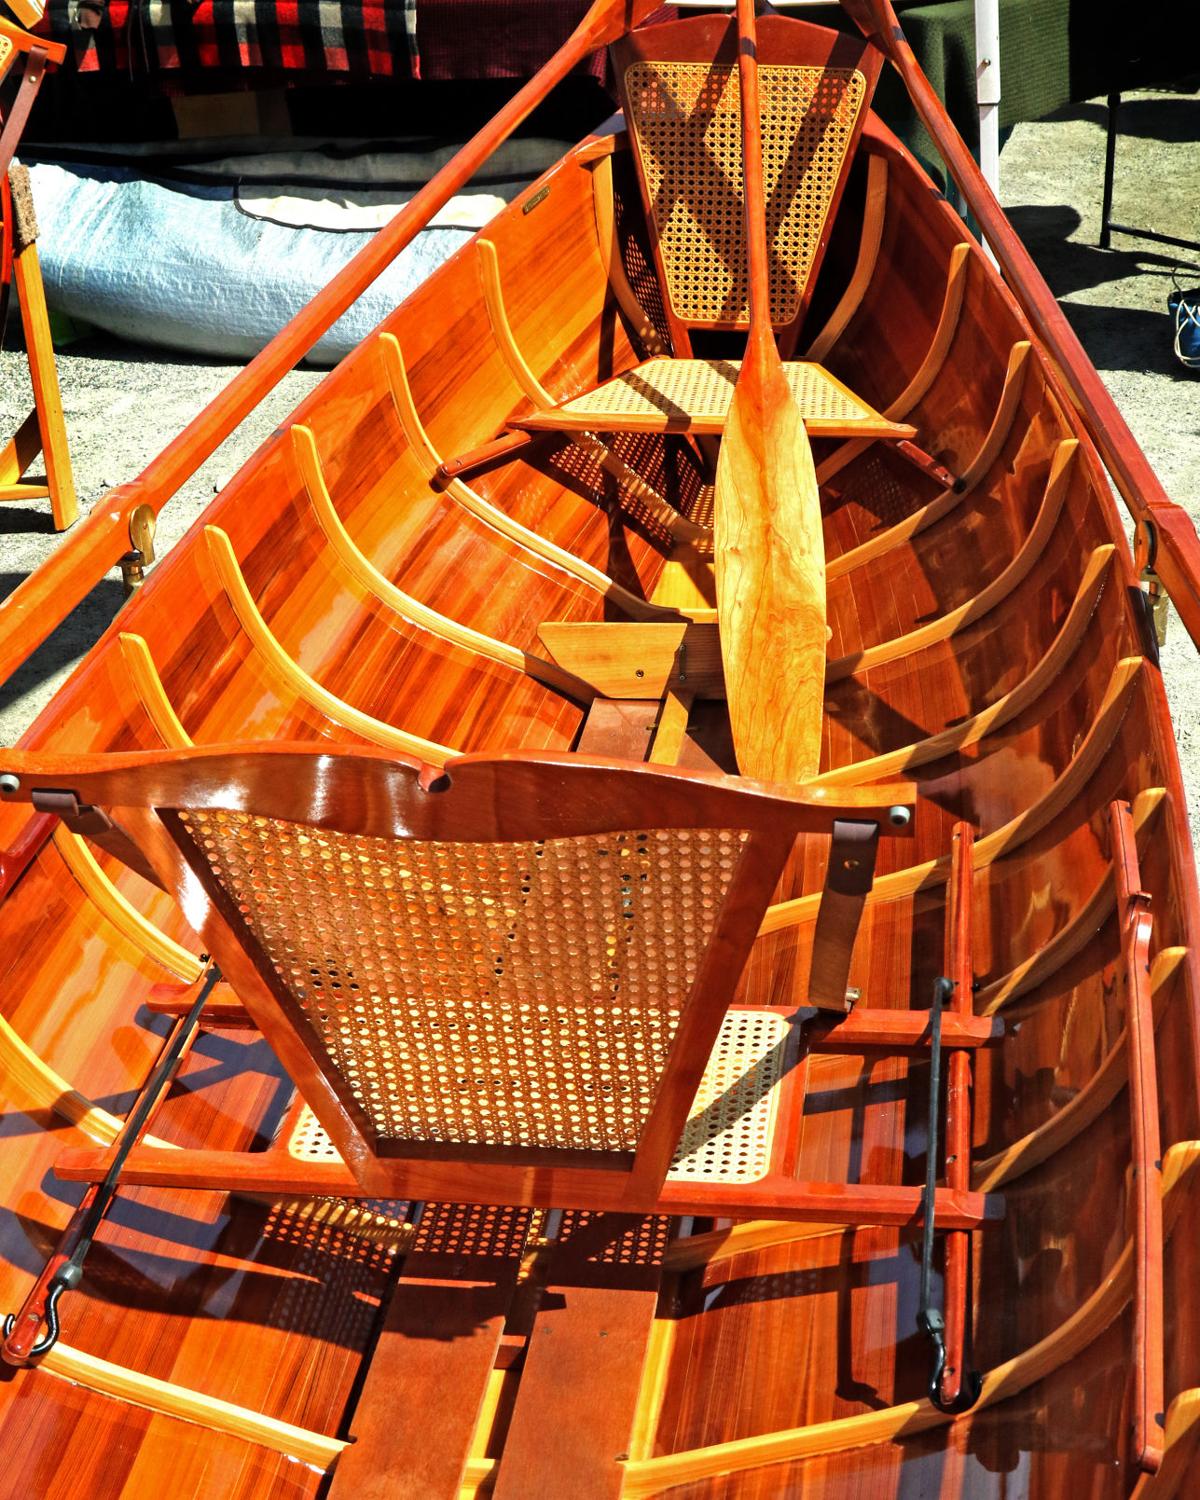 PHOTOS Wooden boat show at Mystic Seaport Museum Stonington